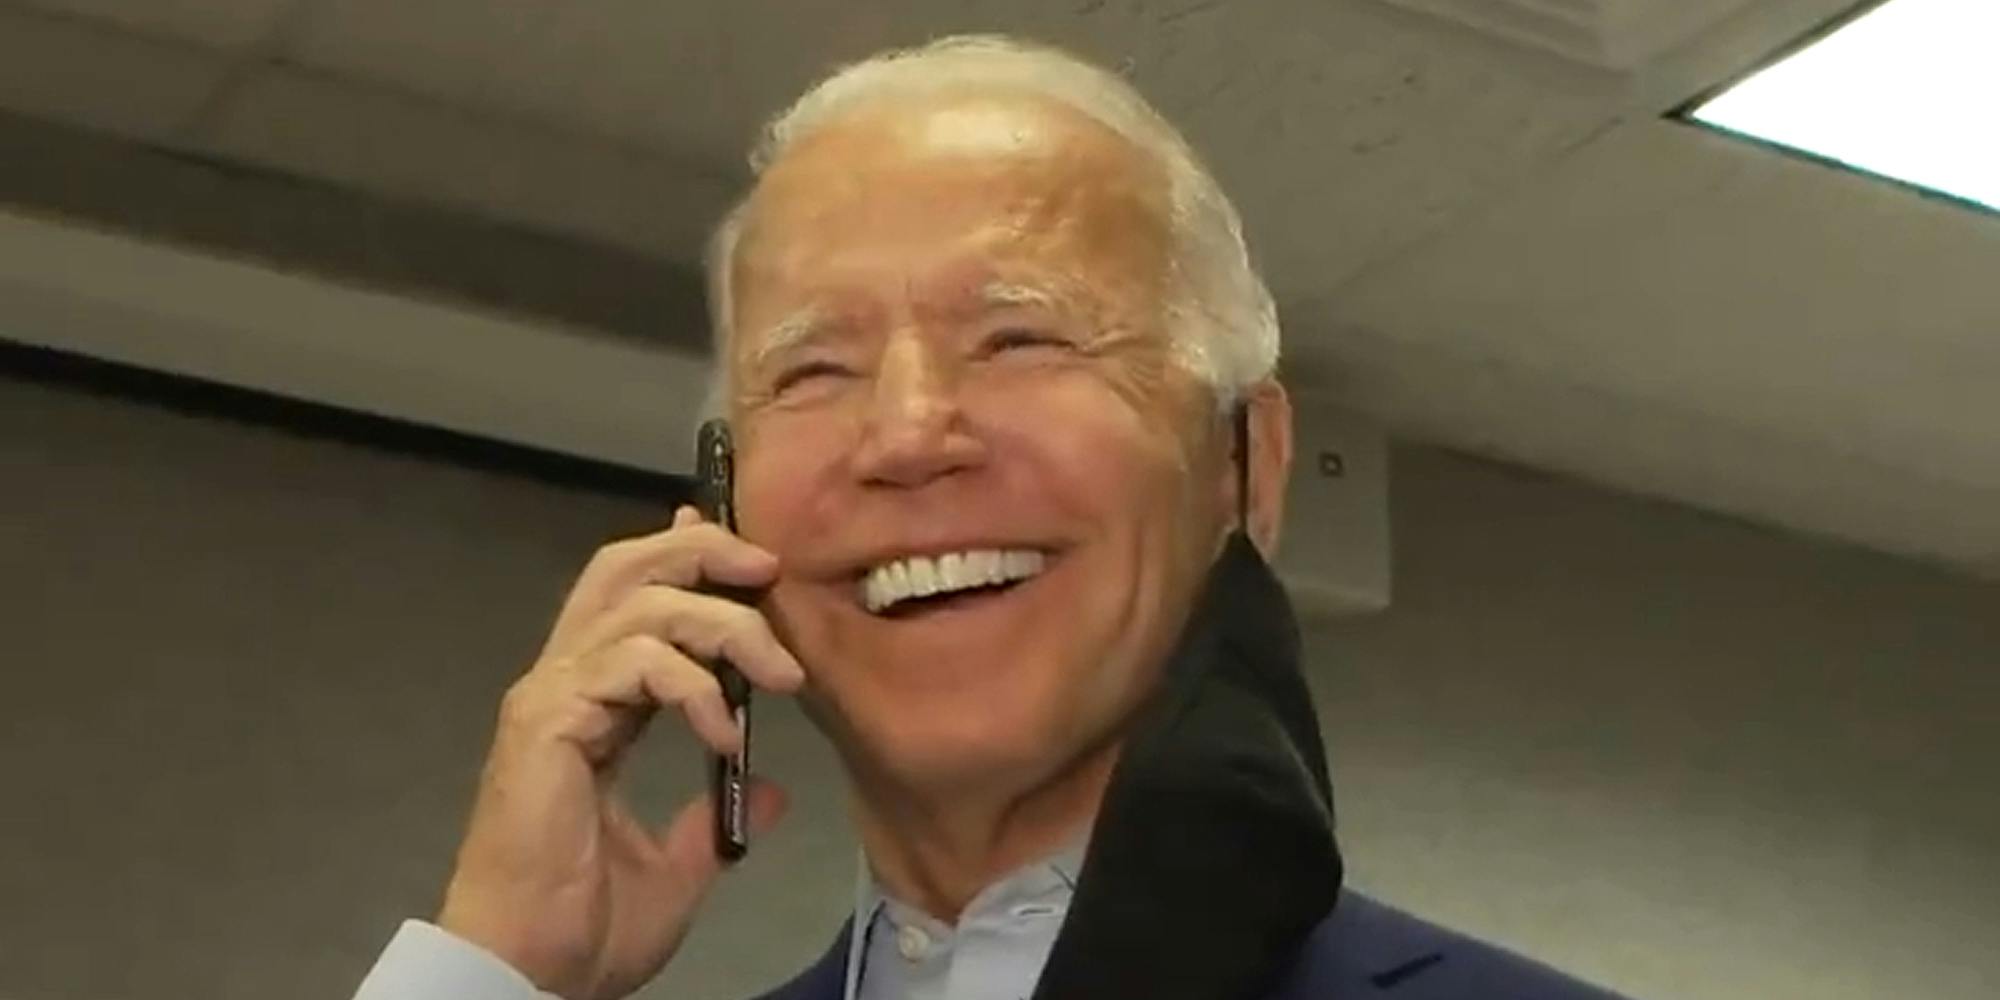 Joe Biden speaking into phone held up to his ear